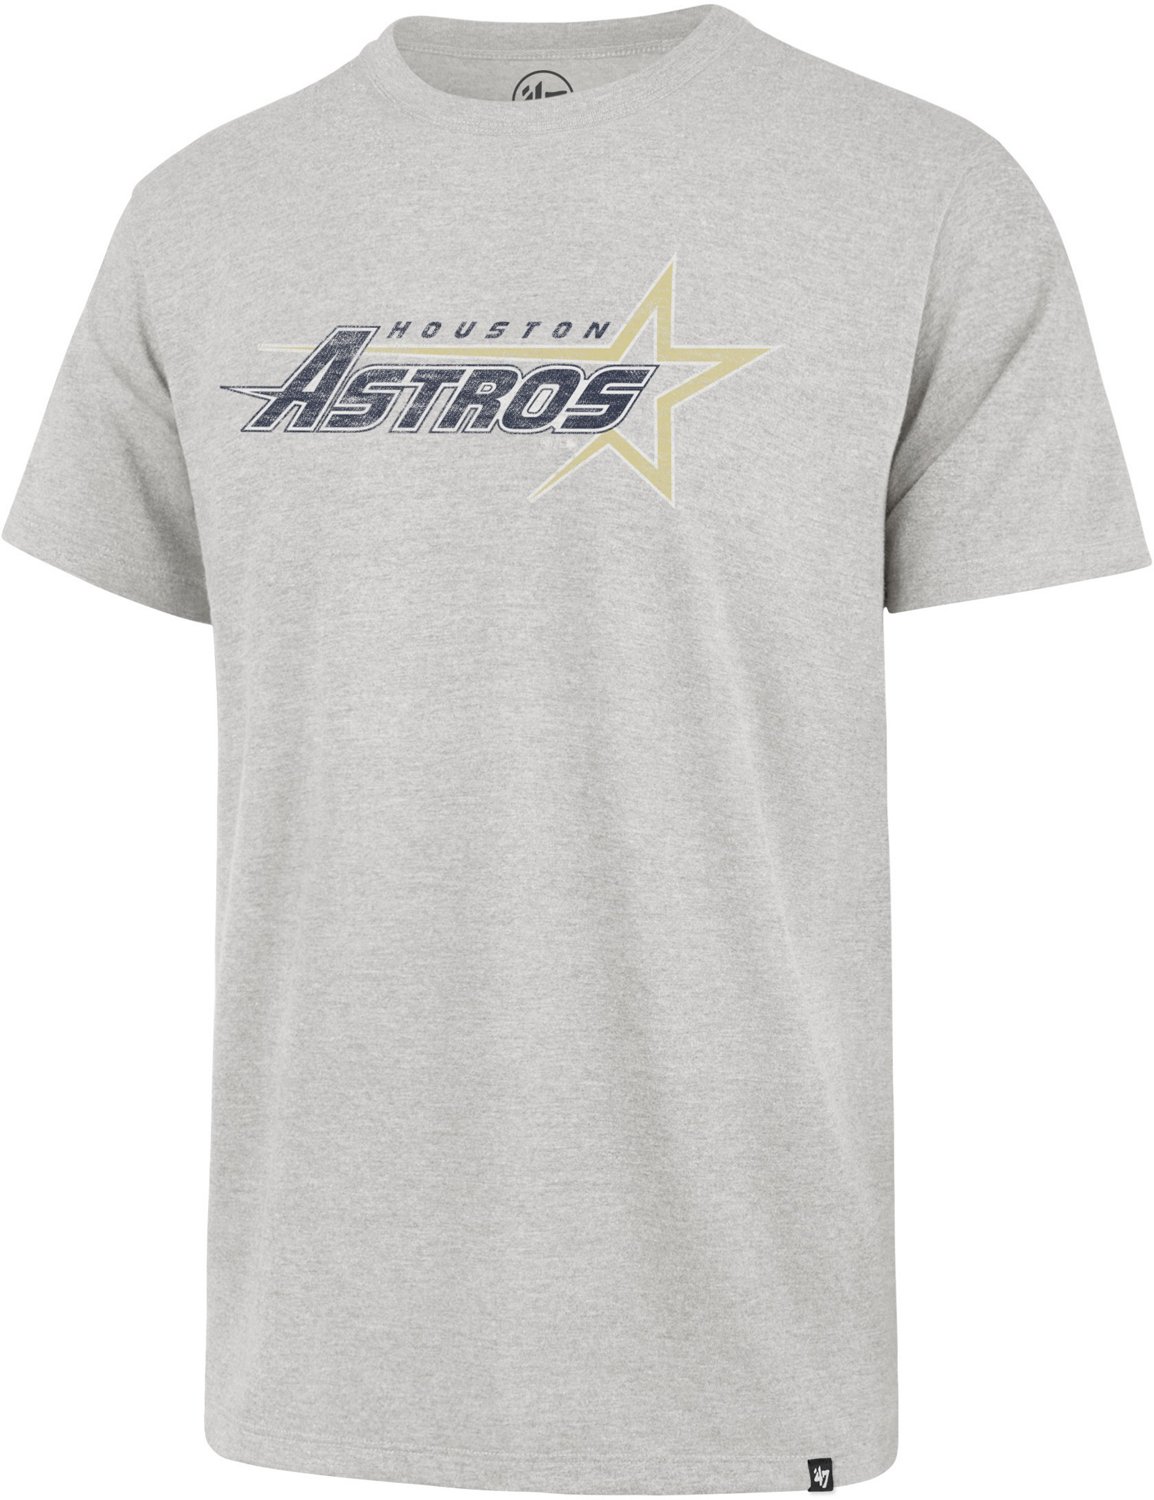 astros performance shirt